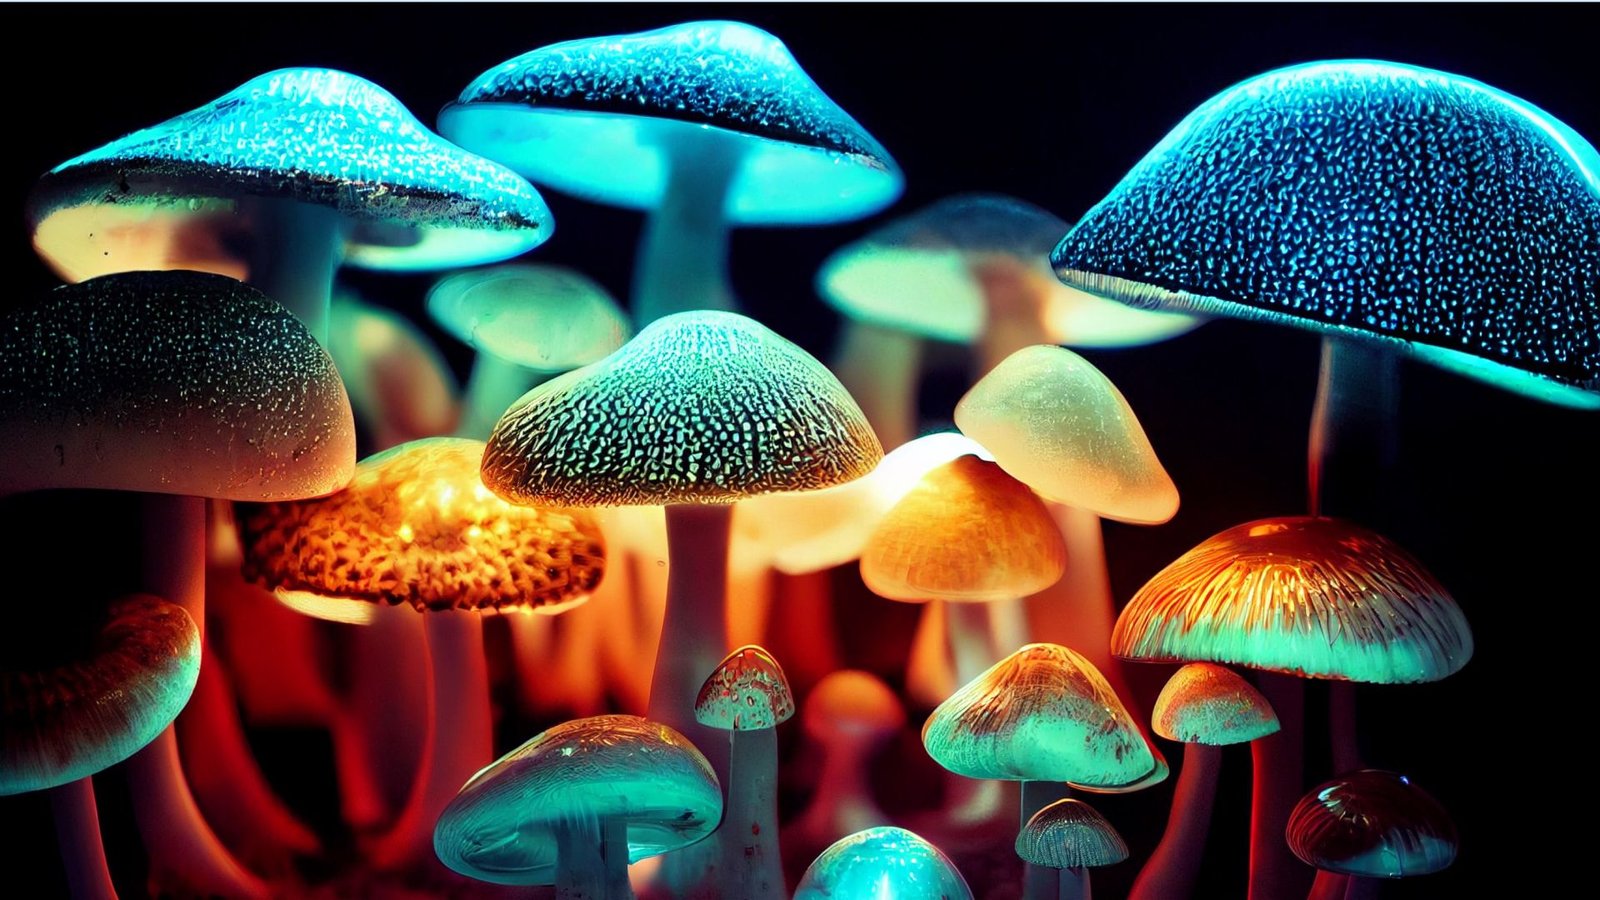 Can I Smoke Cannabis While on Magic Mushrooms?